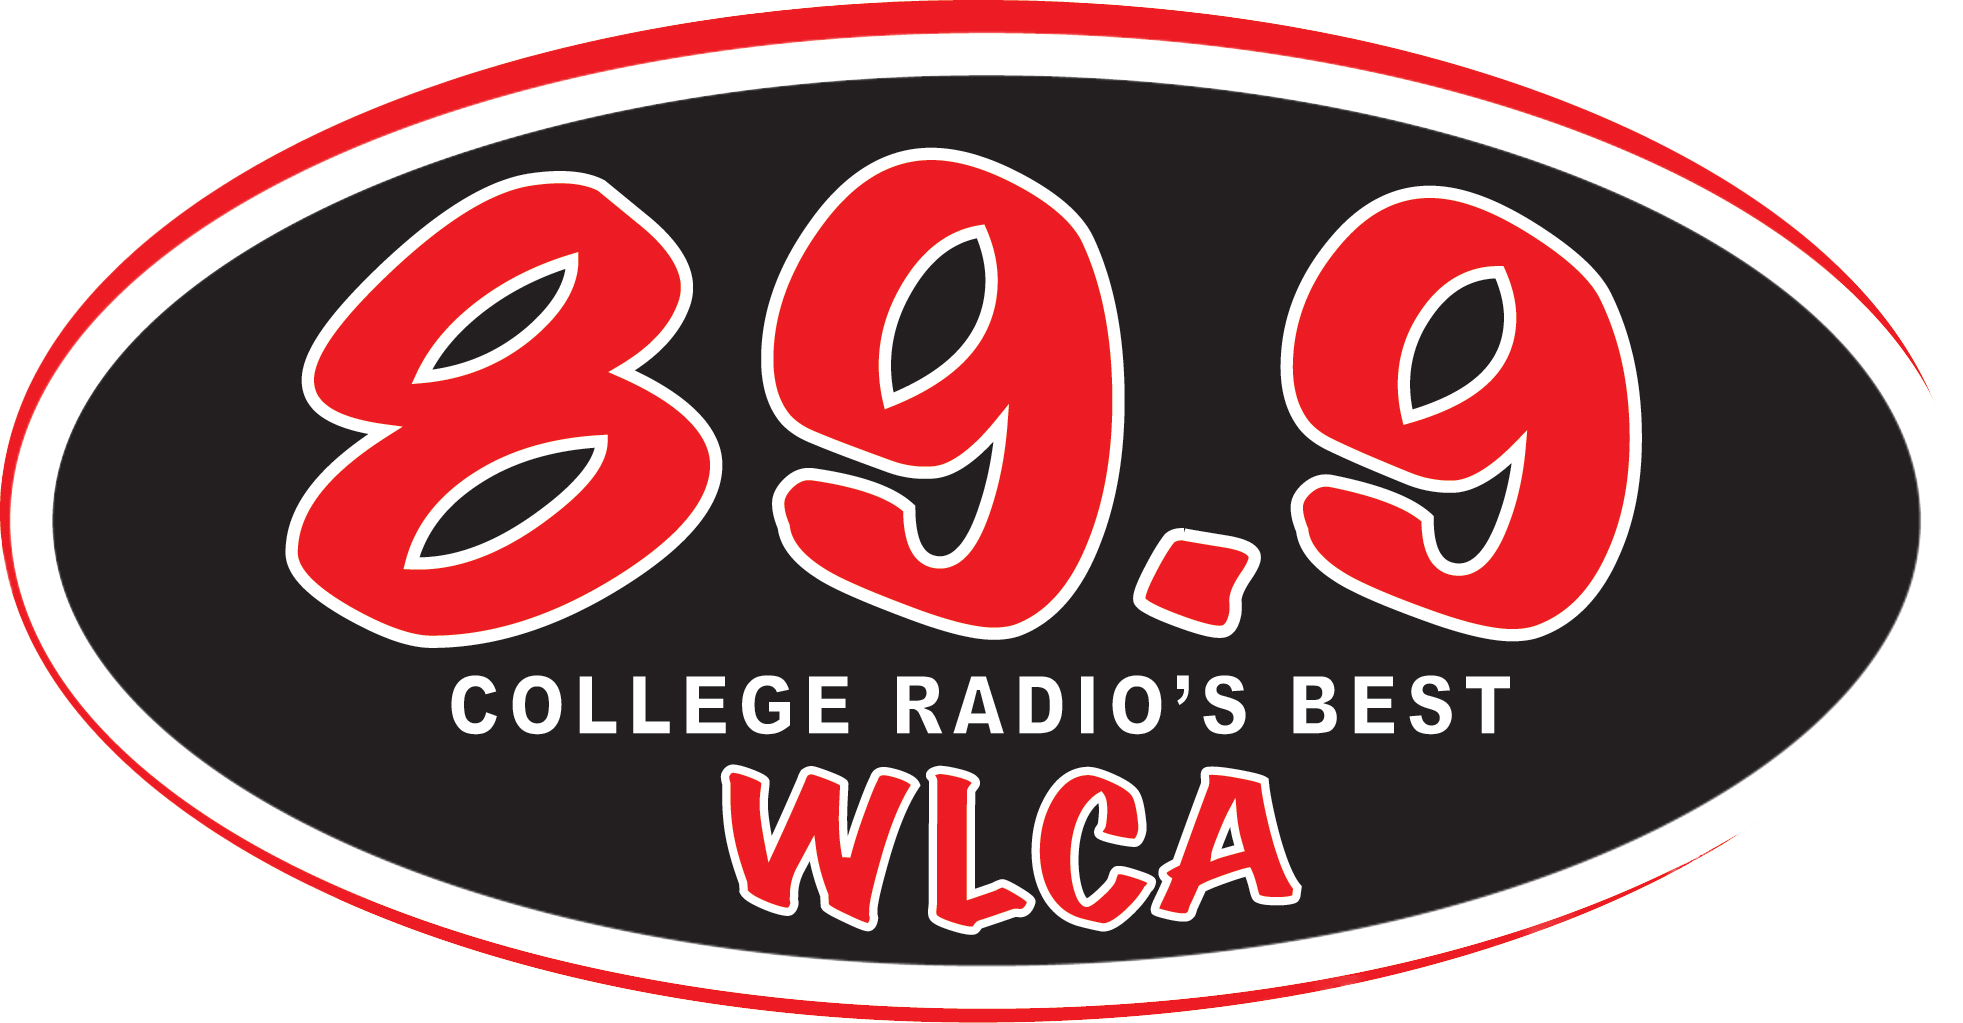 WLCA College Radio's Best